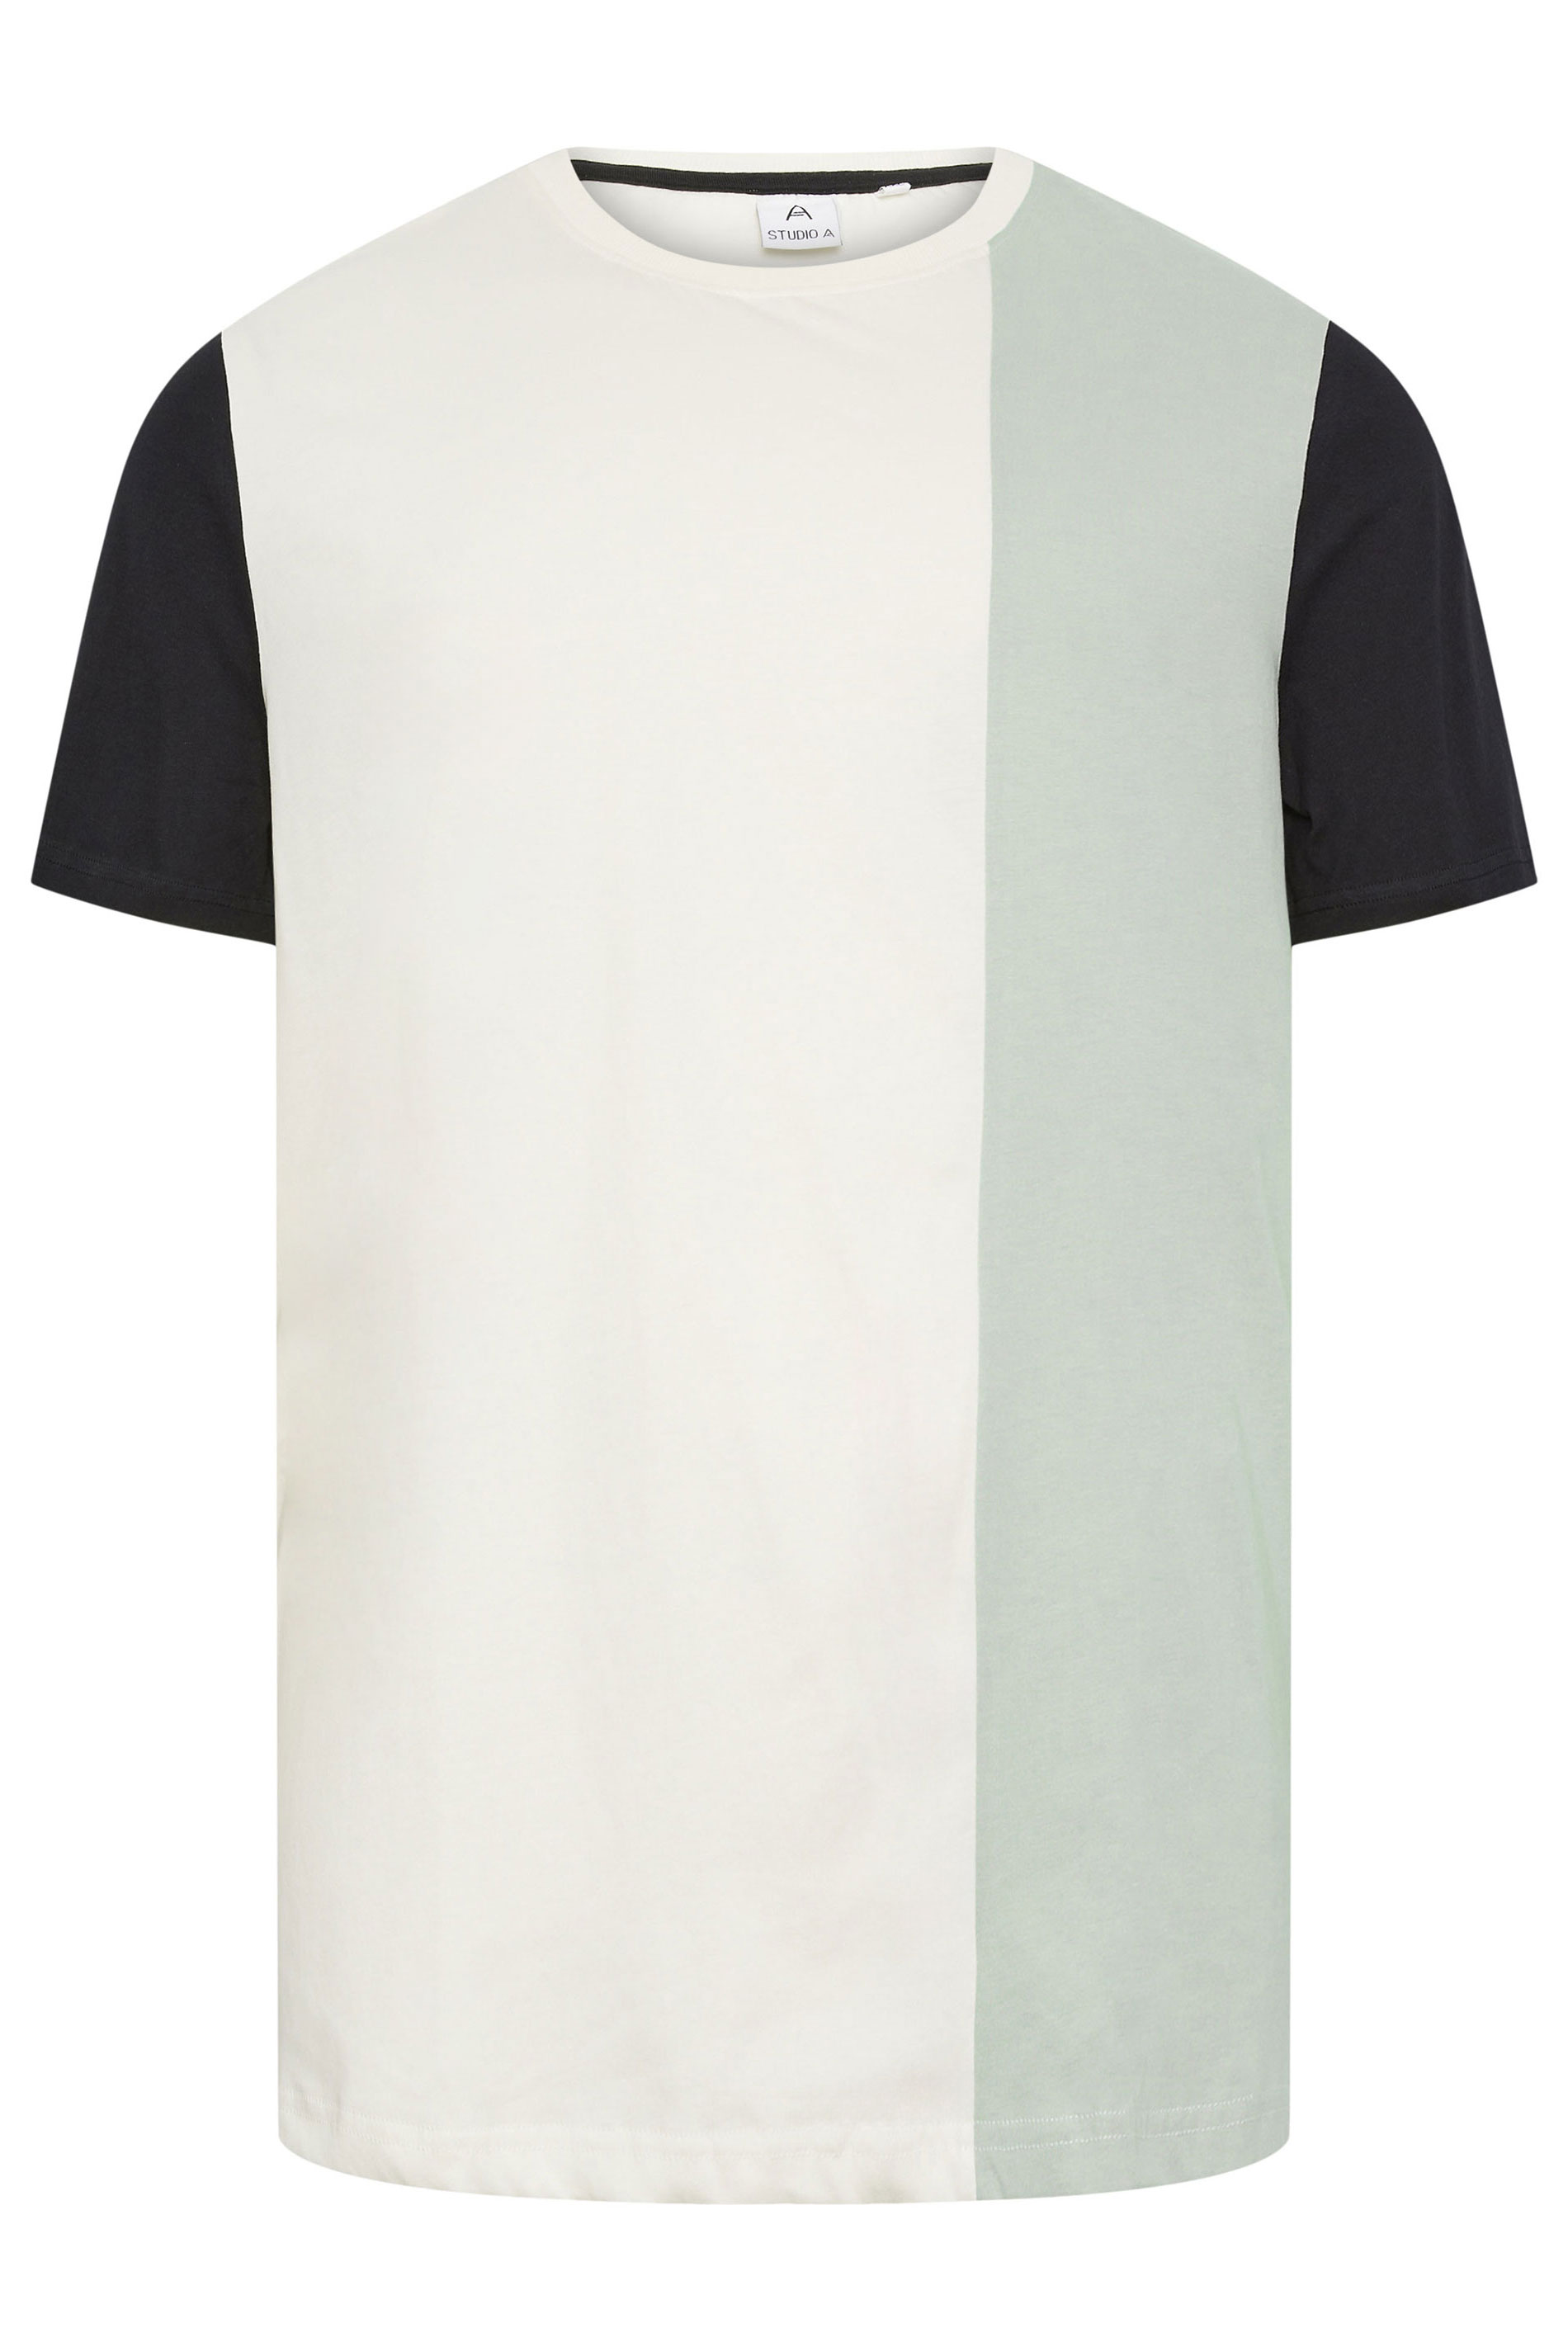 STUDIO A Big & Tall White Short Sleeve Cut & Sew T-Shirt | BadRhino 2